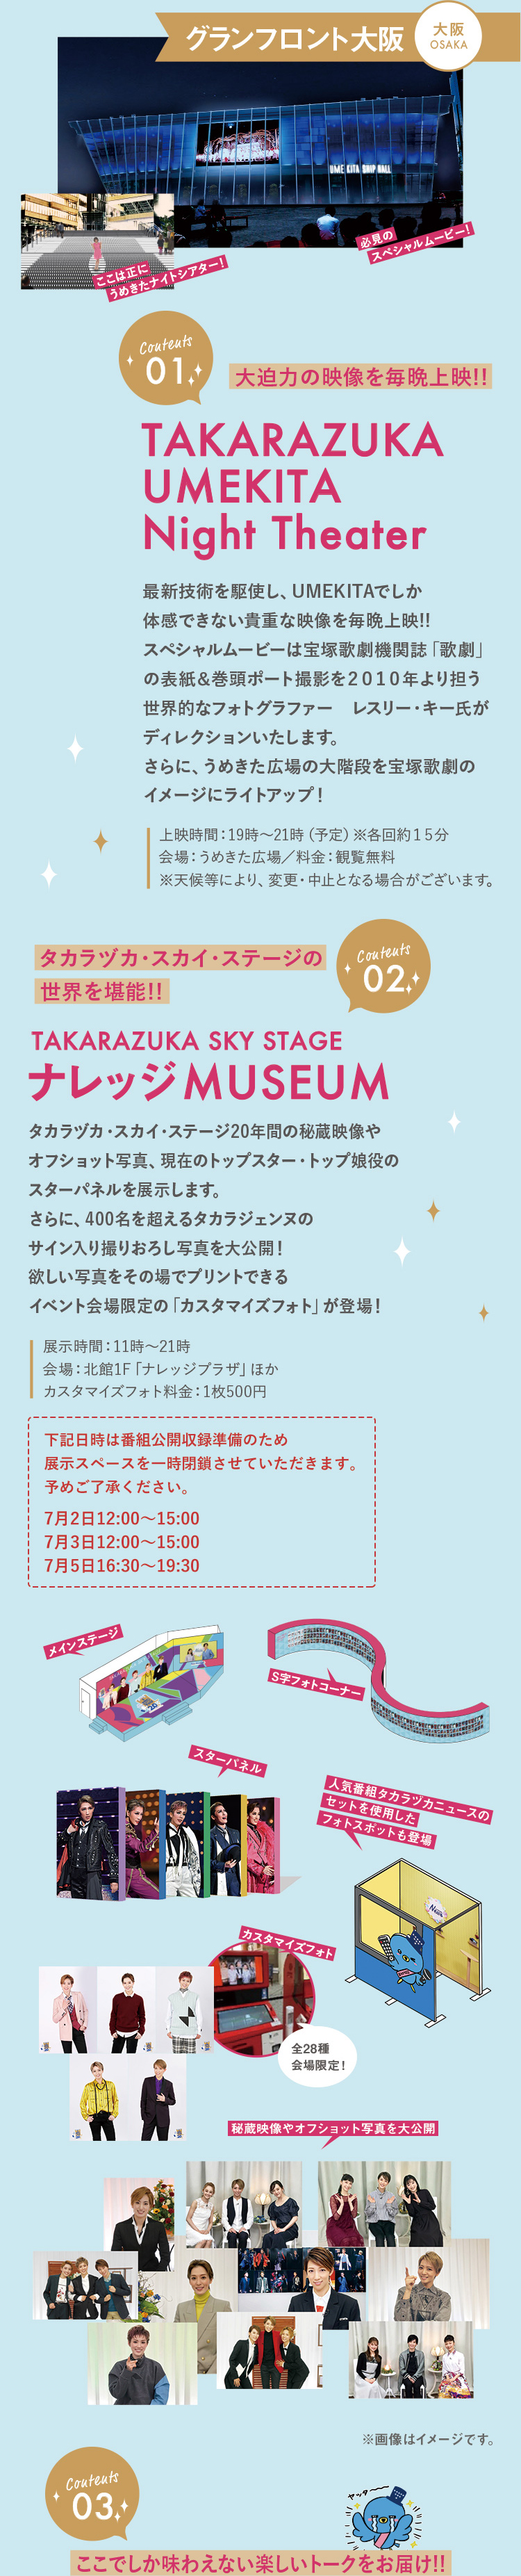 2022.7.1(Fri)10(SUN) inOtg/contents01 TAKARAZUKA YMEKITA Night Theater/content02 TAKARAZUKA SKY STAGE ibWMUSEUM/contents03 J^Cxg JÌI